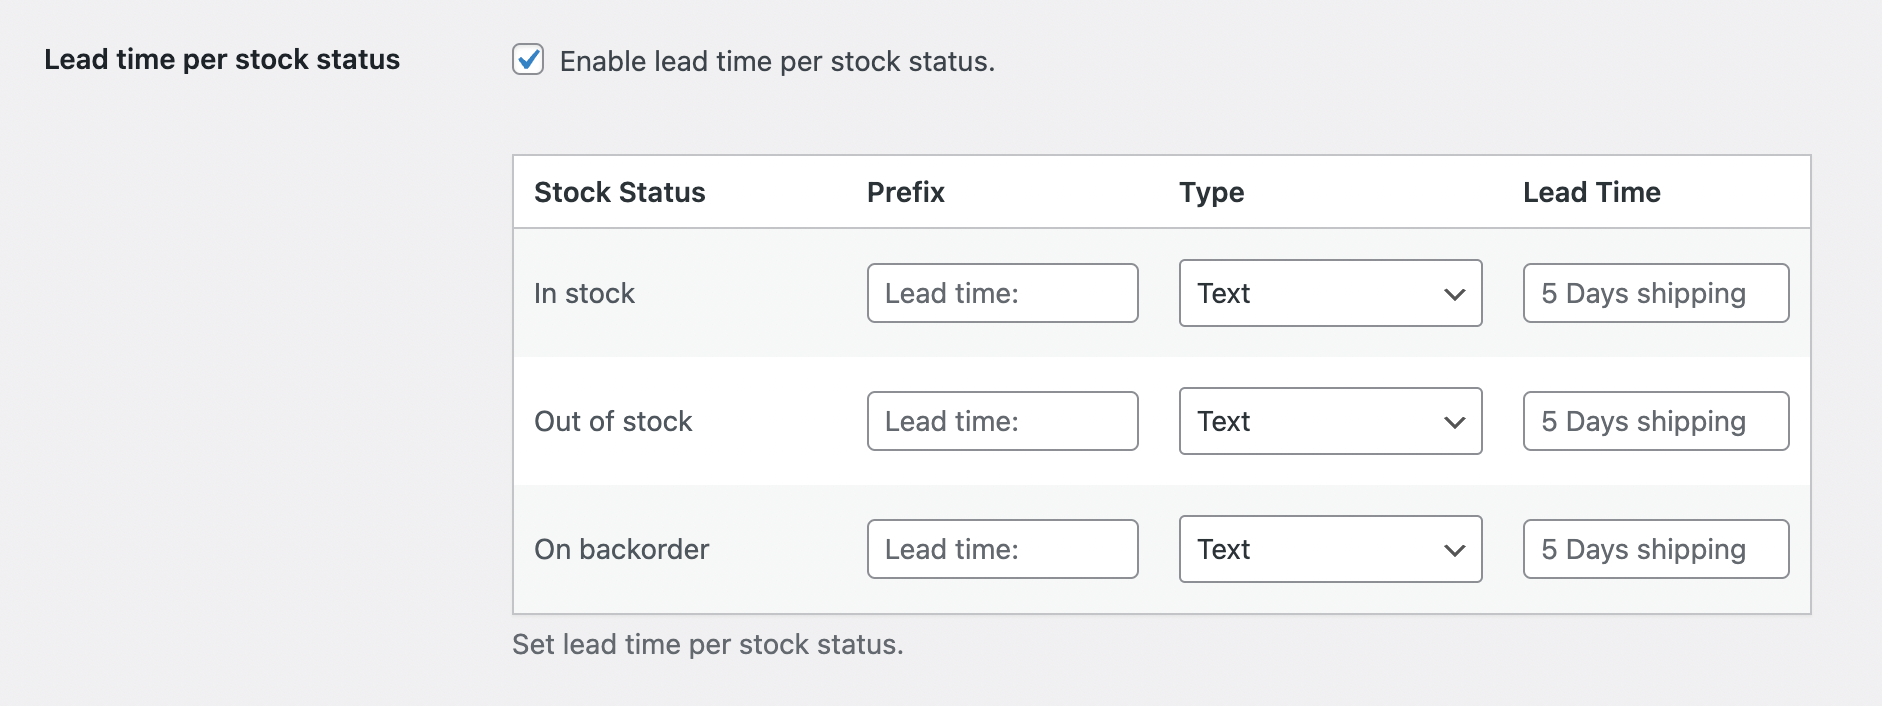 Lead Time per Stock Status